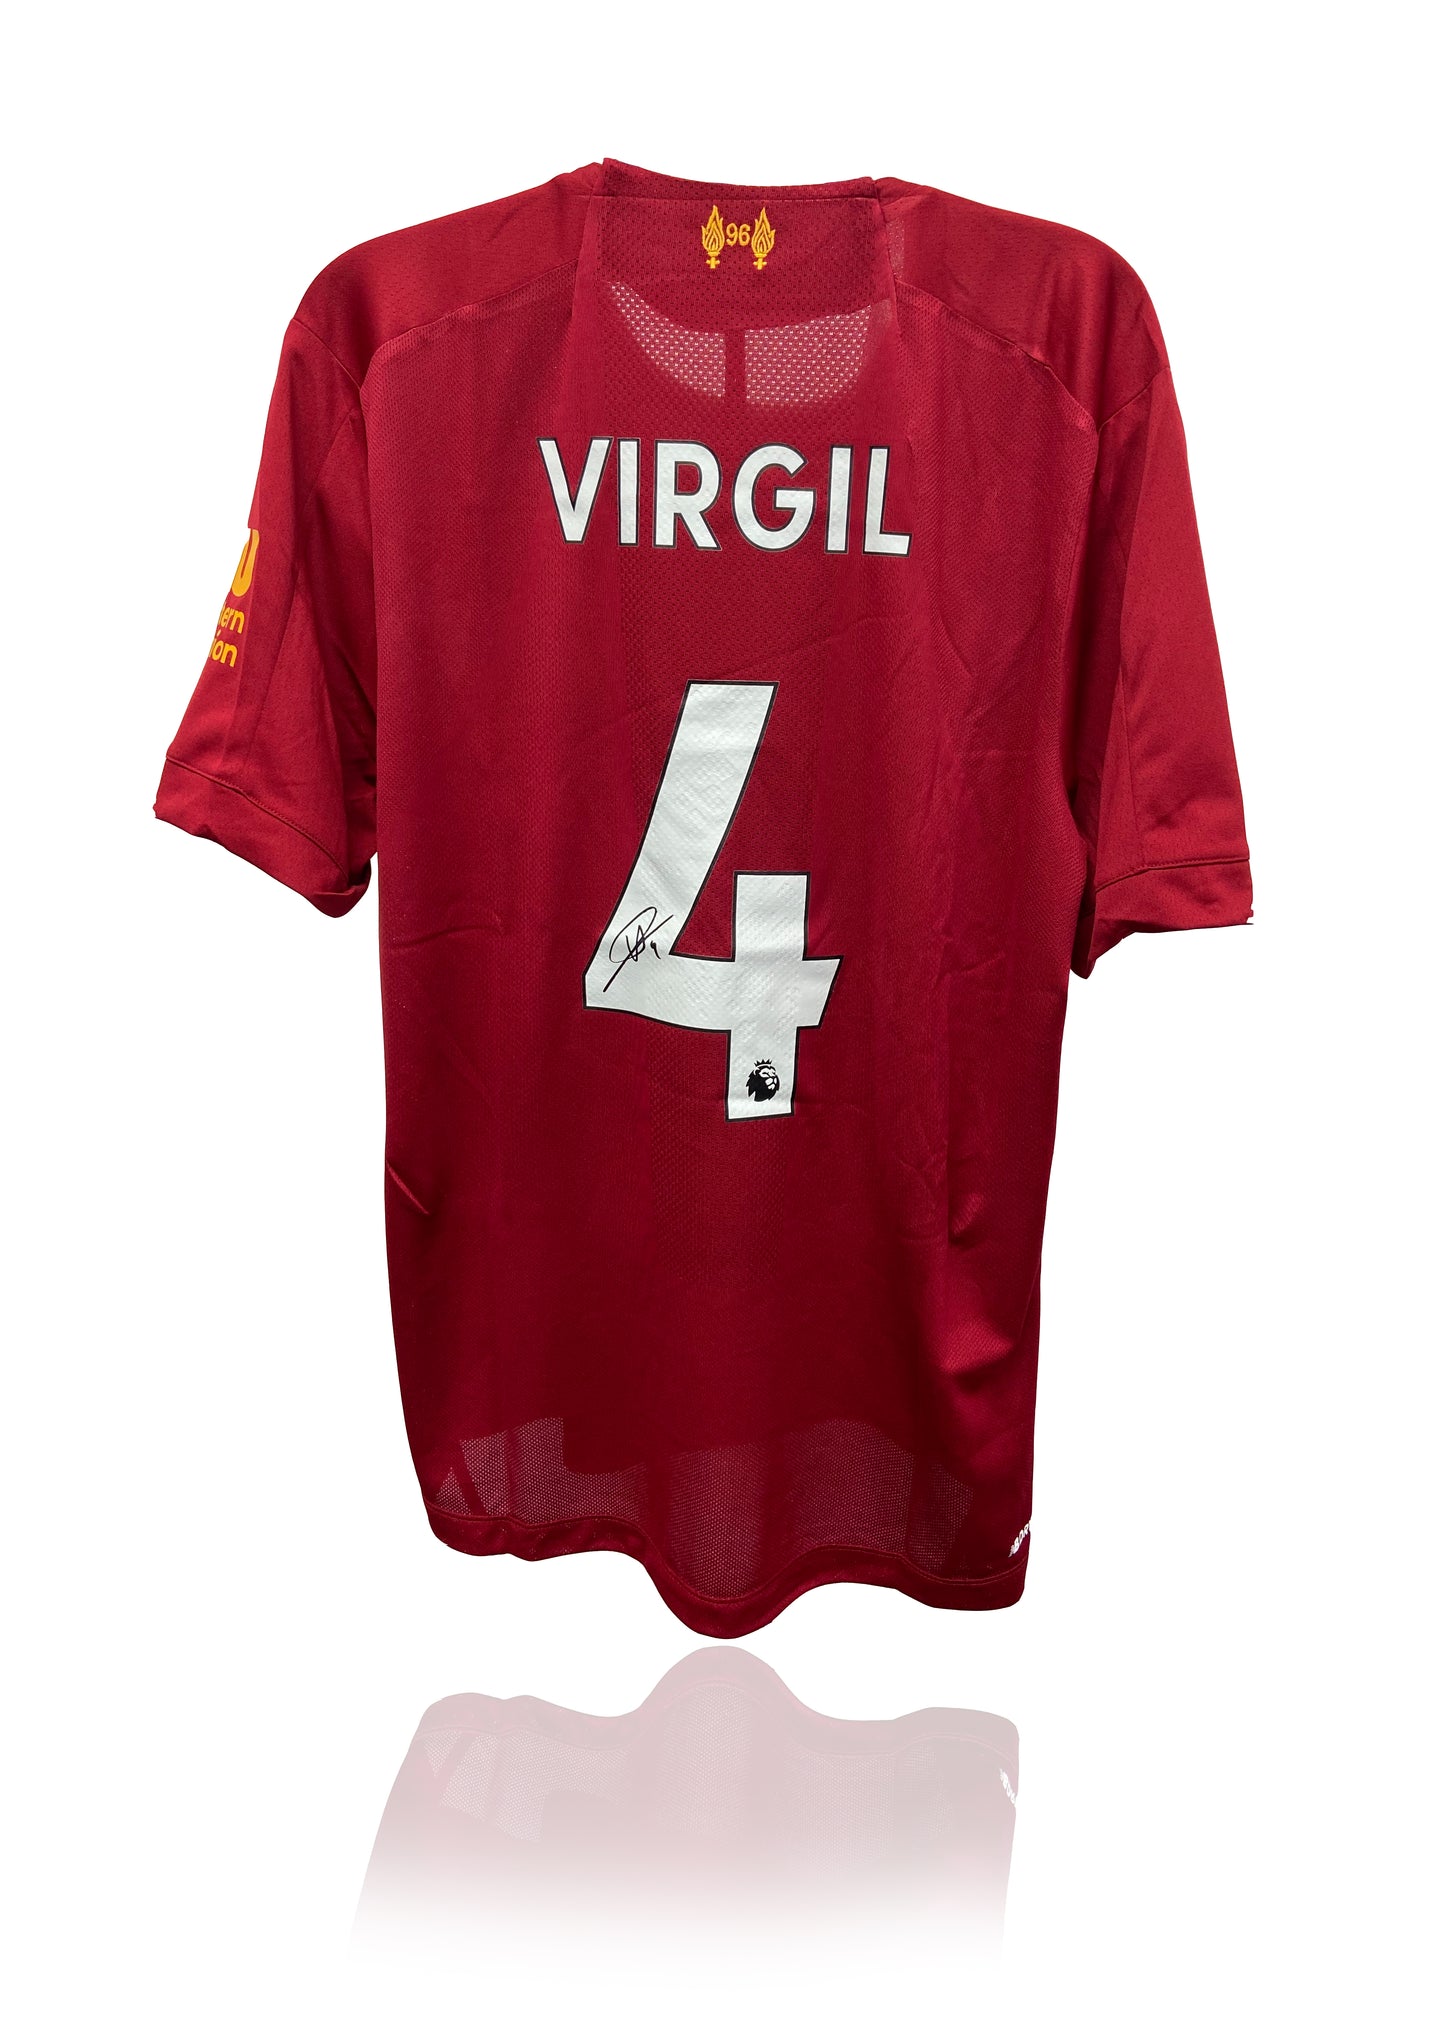 Virgil Van Dijk signed 2019-20 Liverpool Shirt